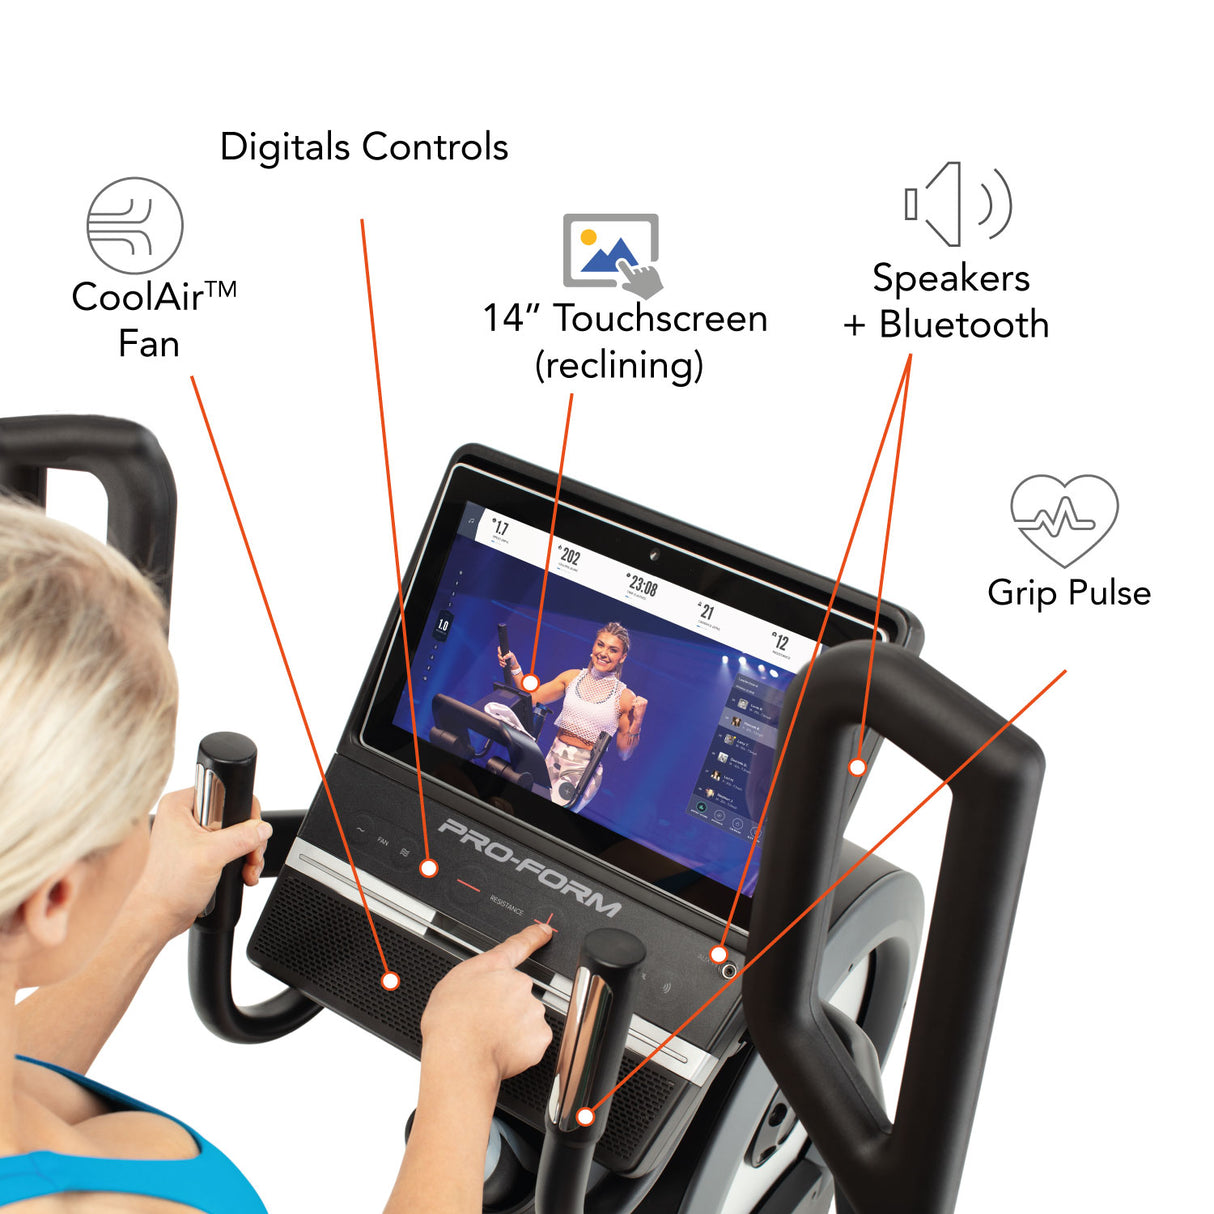 Cardio HIIT Trainer Display features